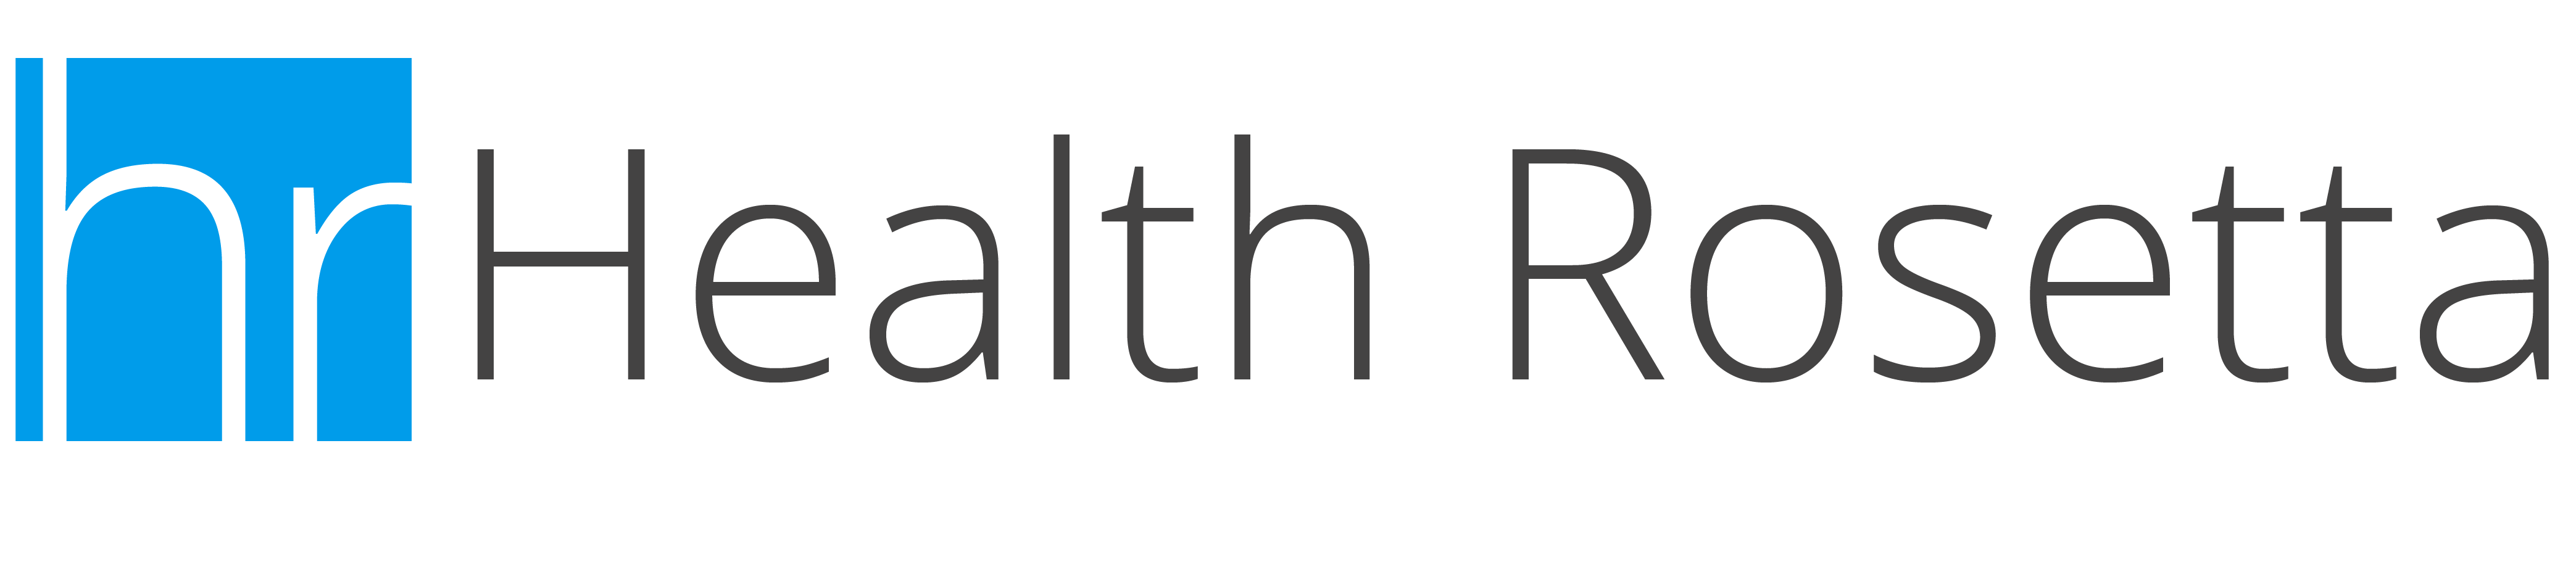 Health Rosetta logo